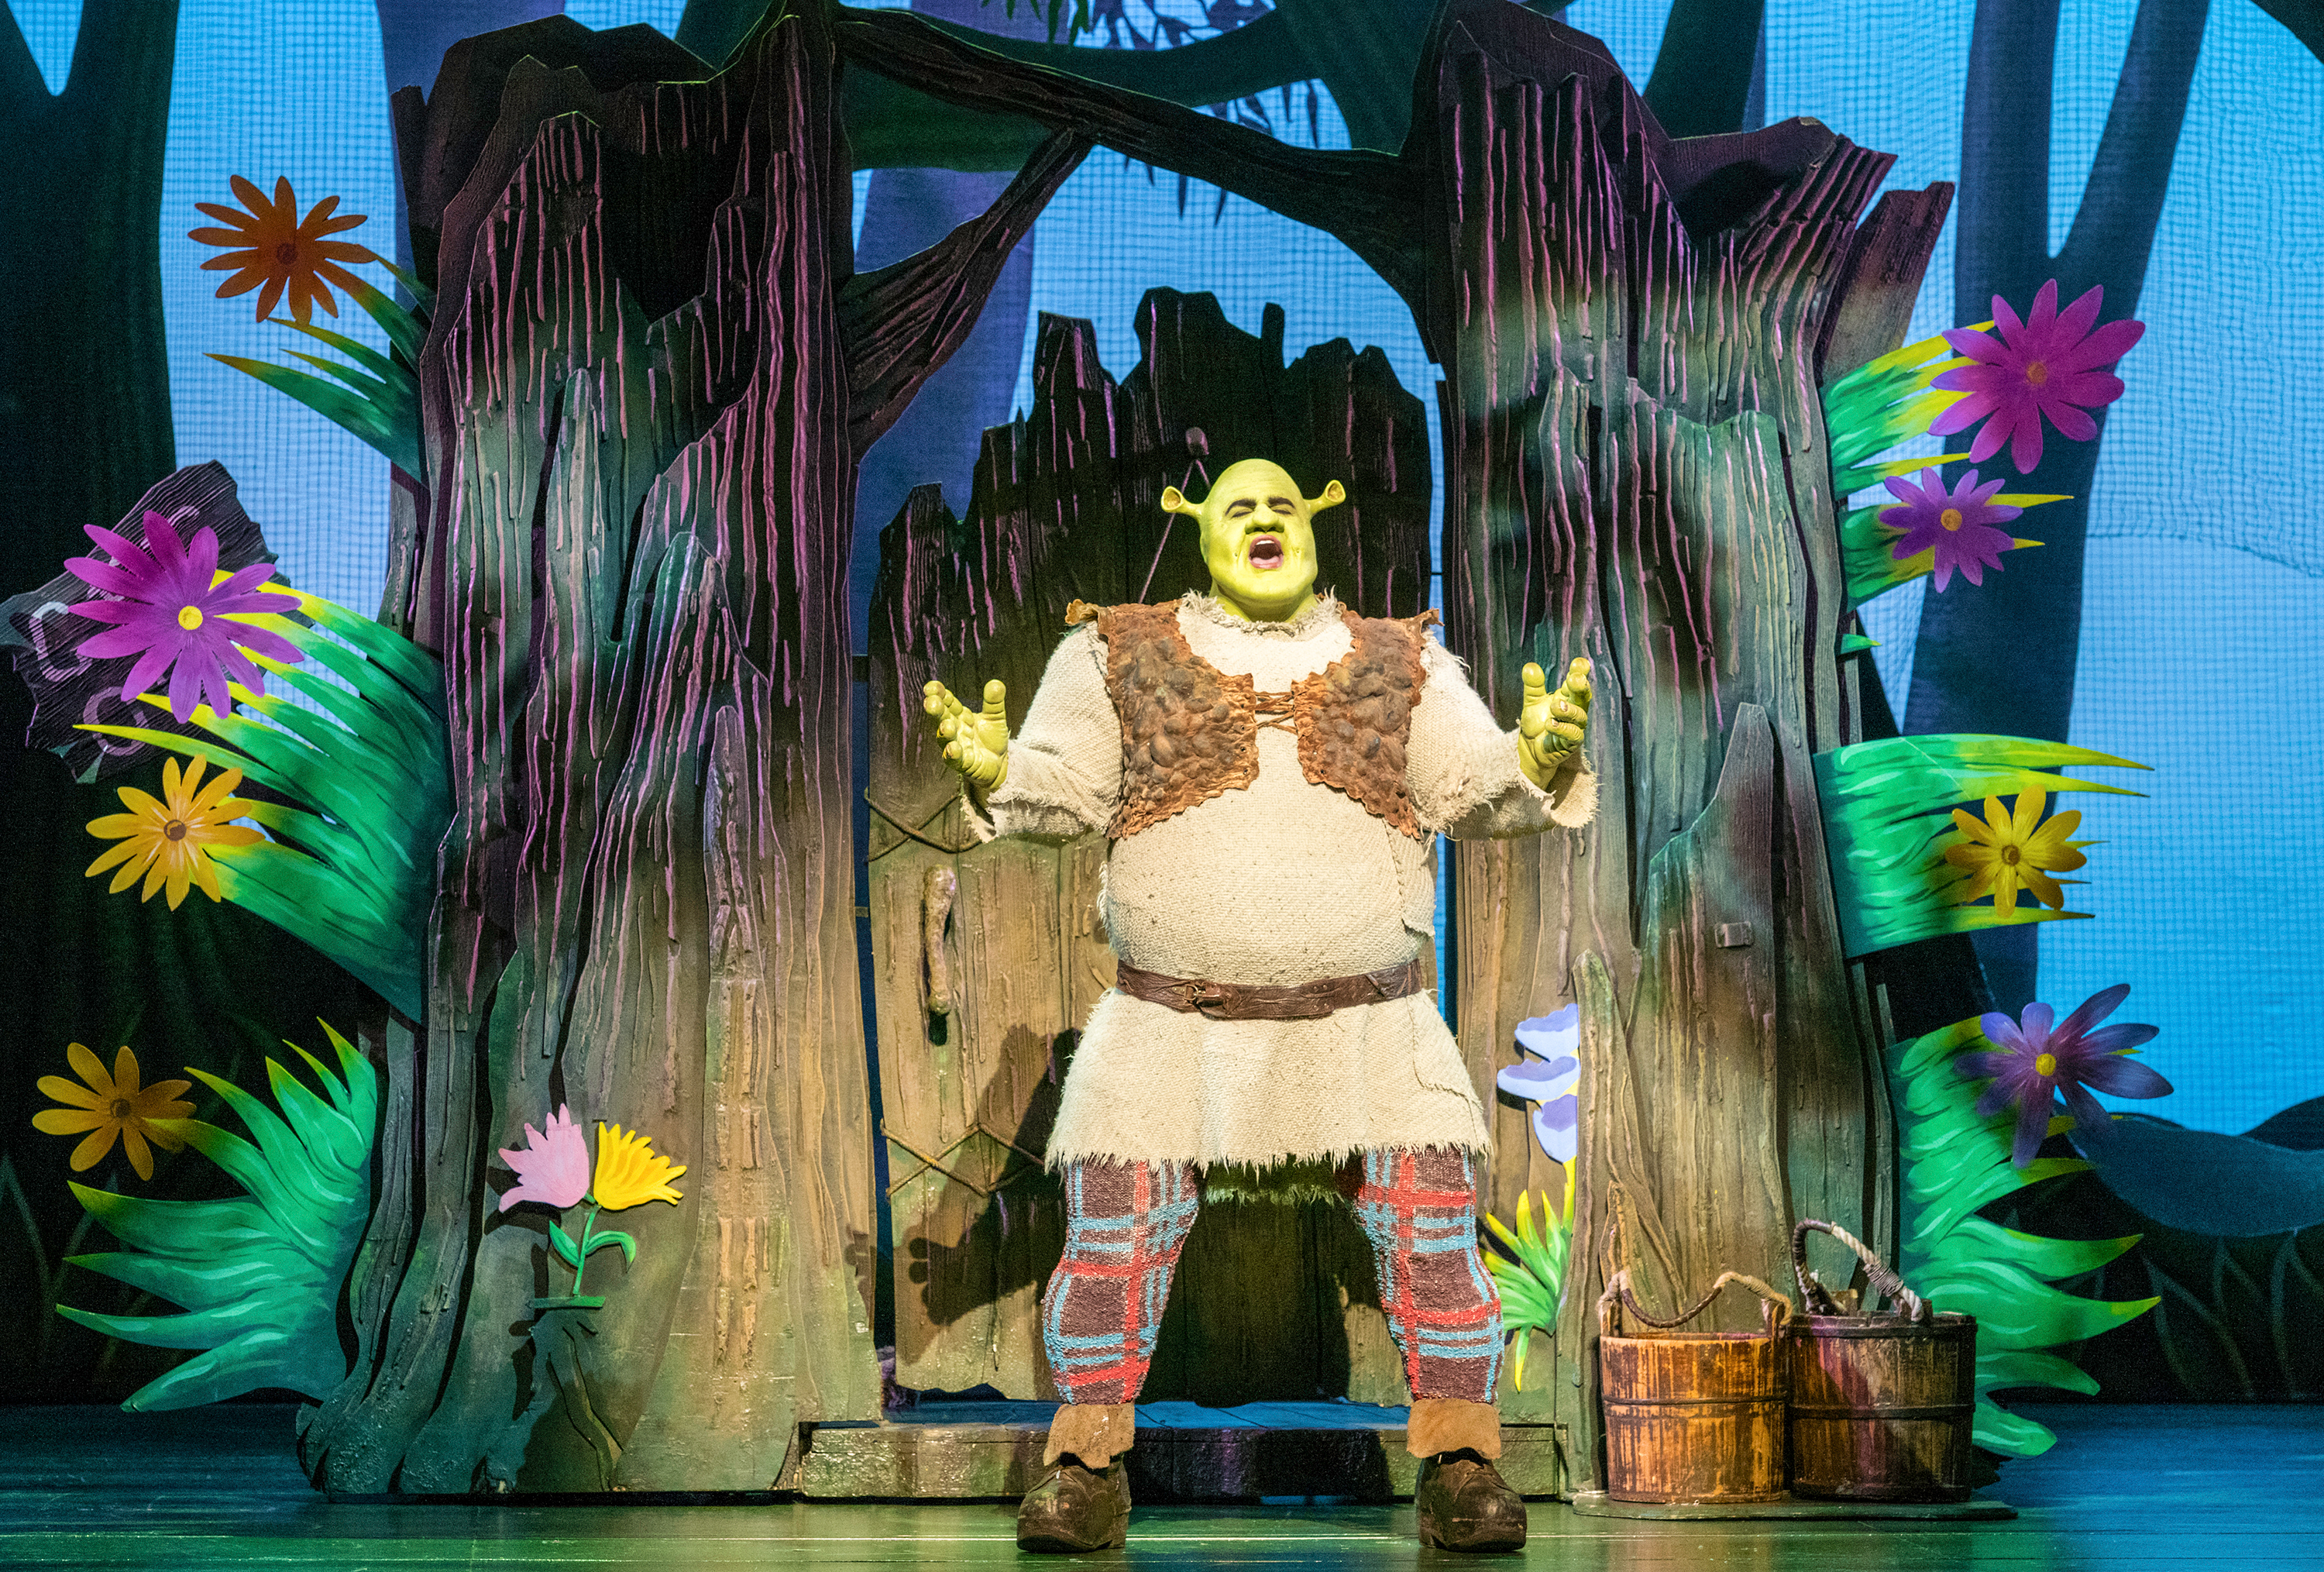 Shrek the Musical (Review) State of the Art Media